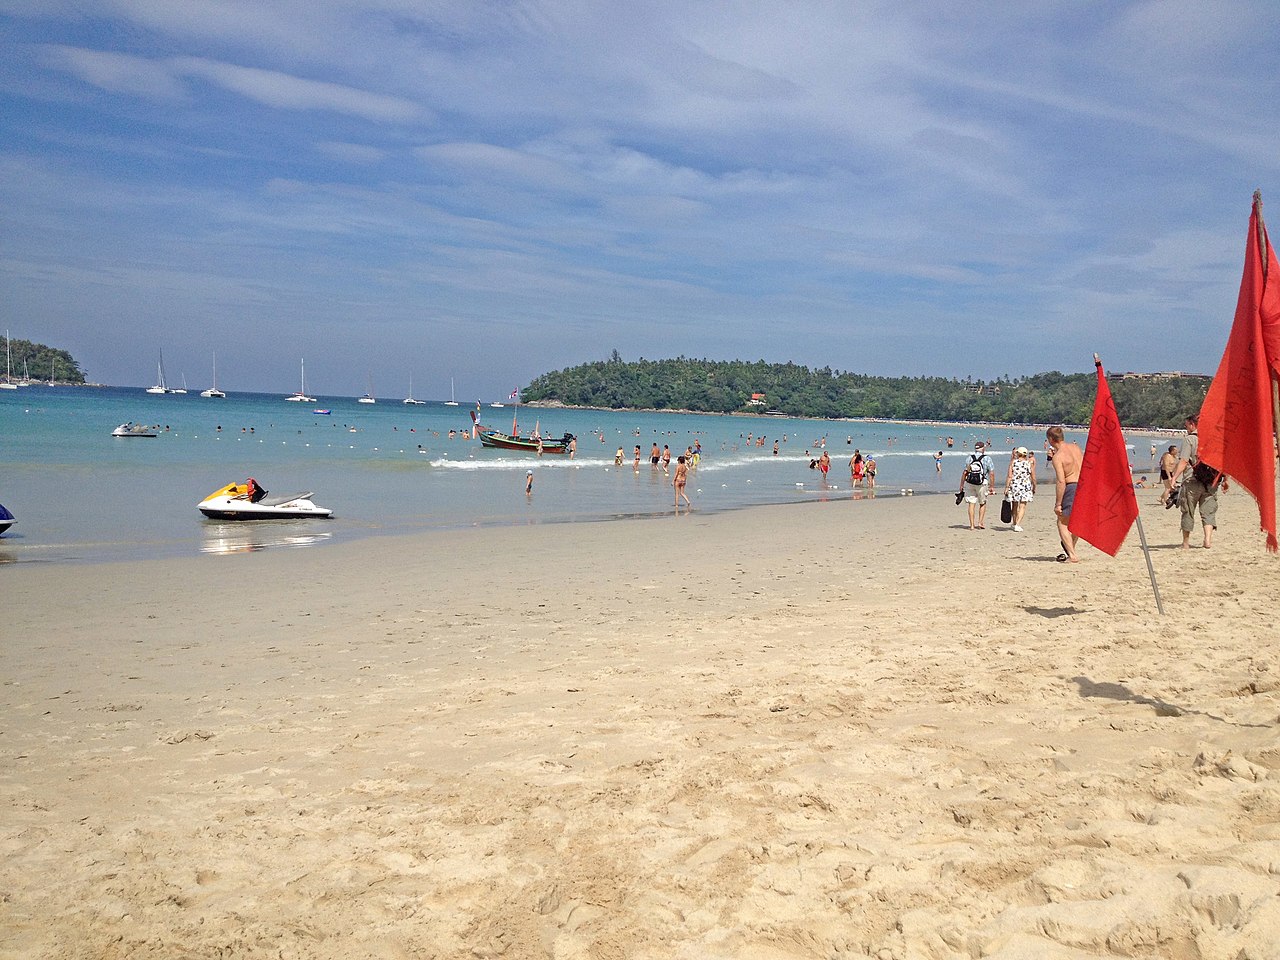 Red flags on Karon Beach, Phuket.